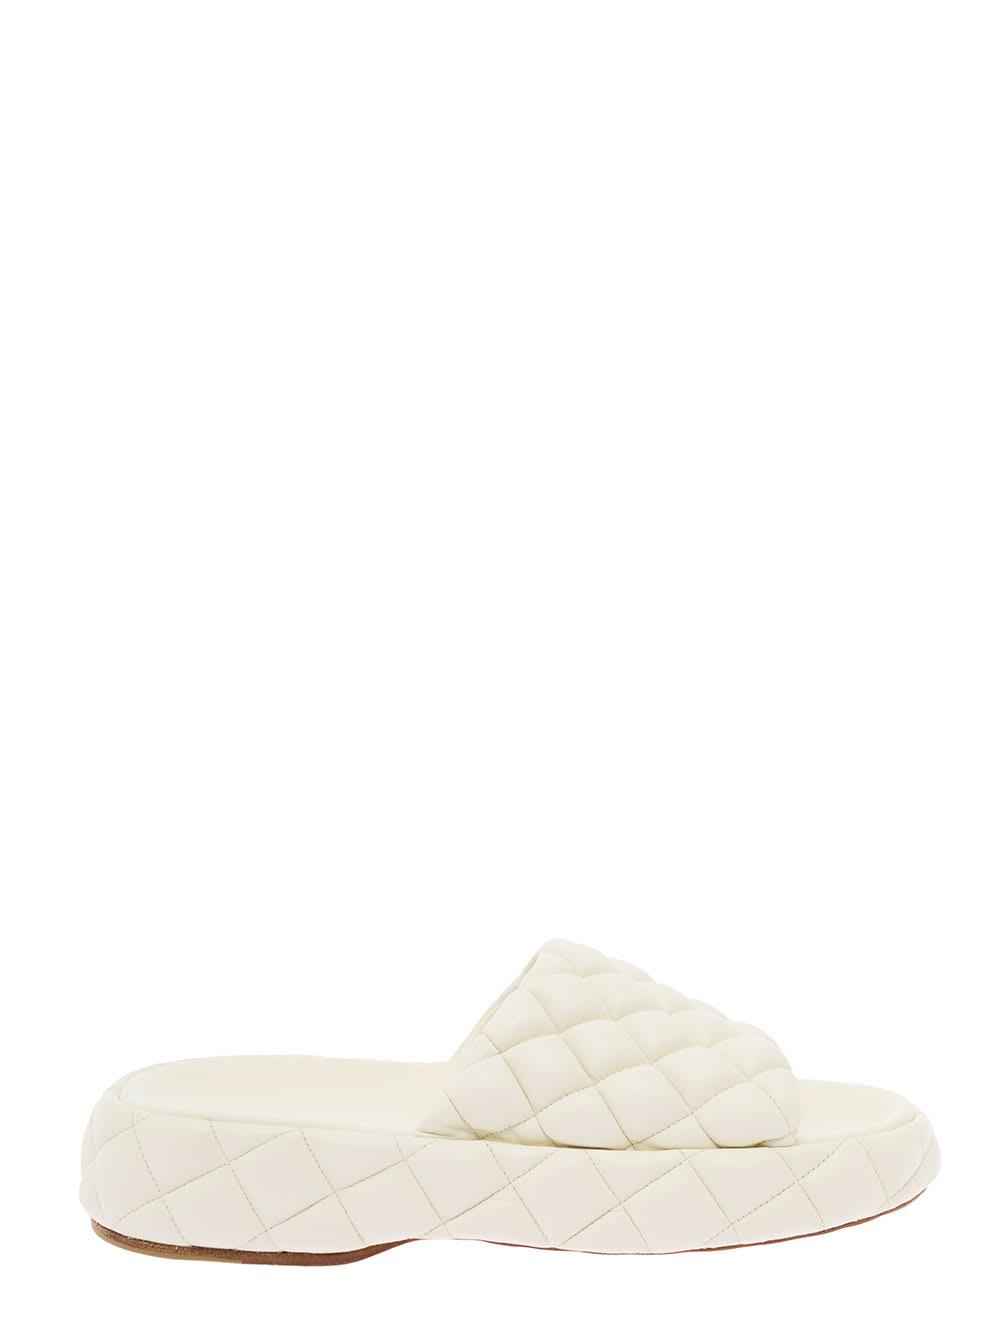 White Quilted Leather Slide Sandals Bottega Veneta Woman